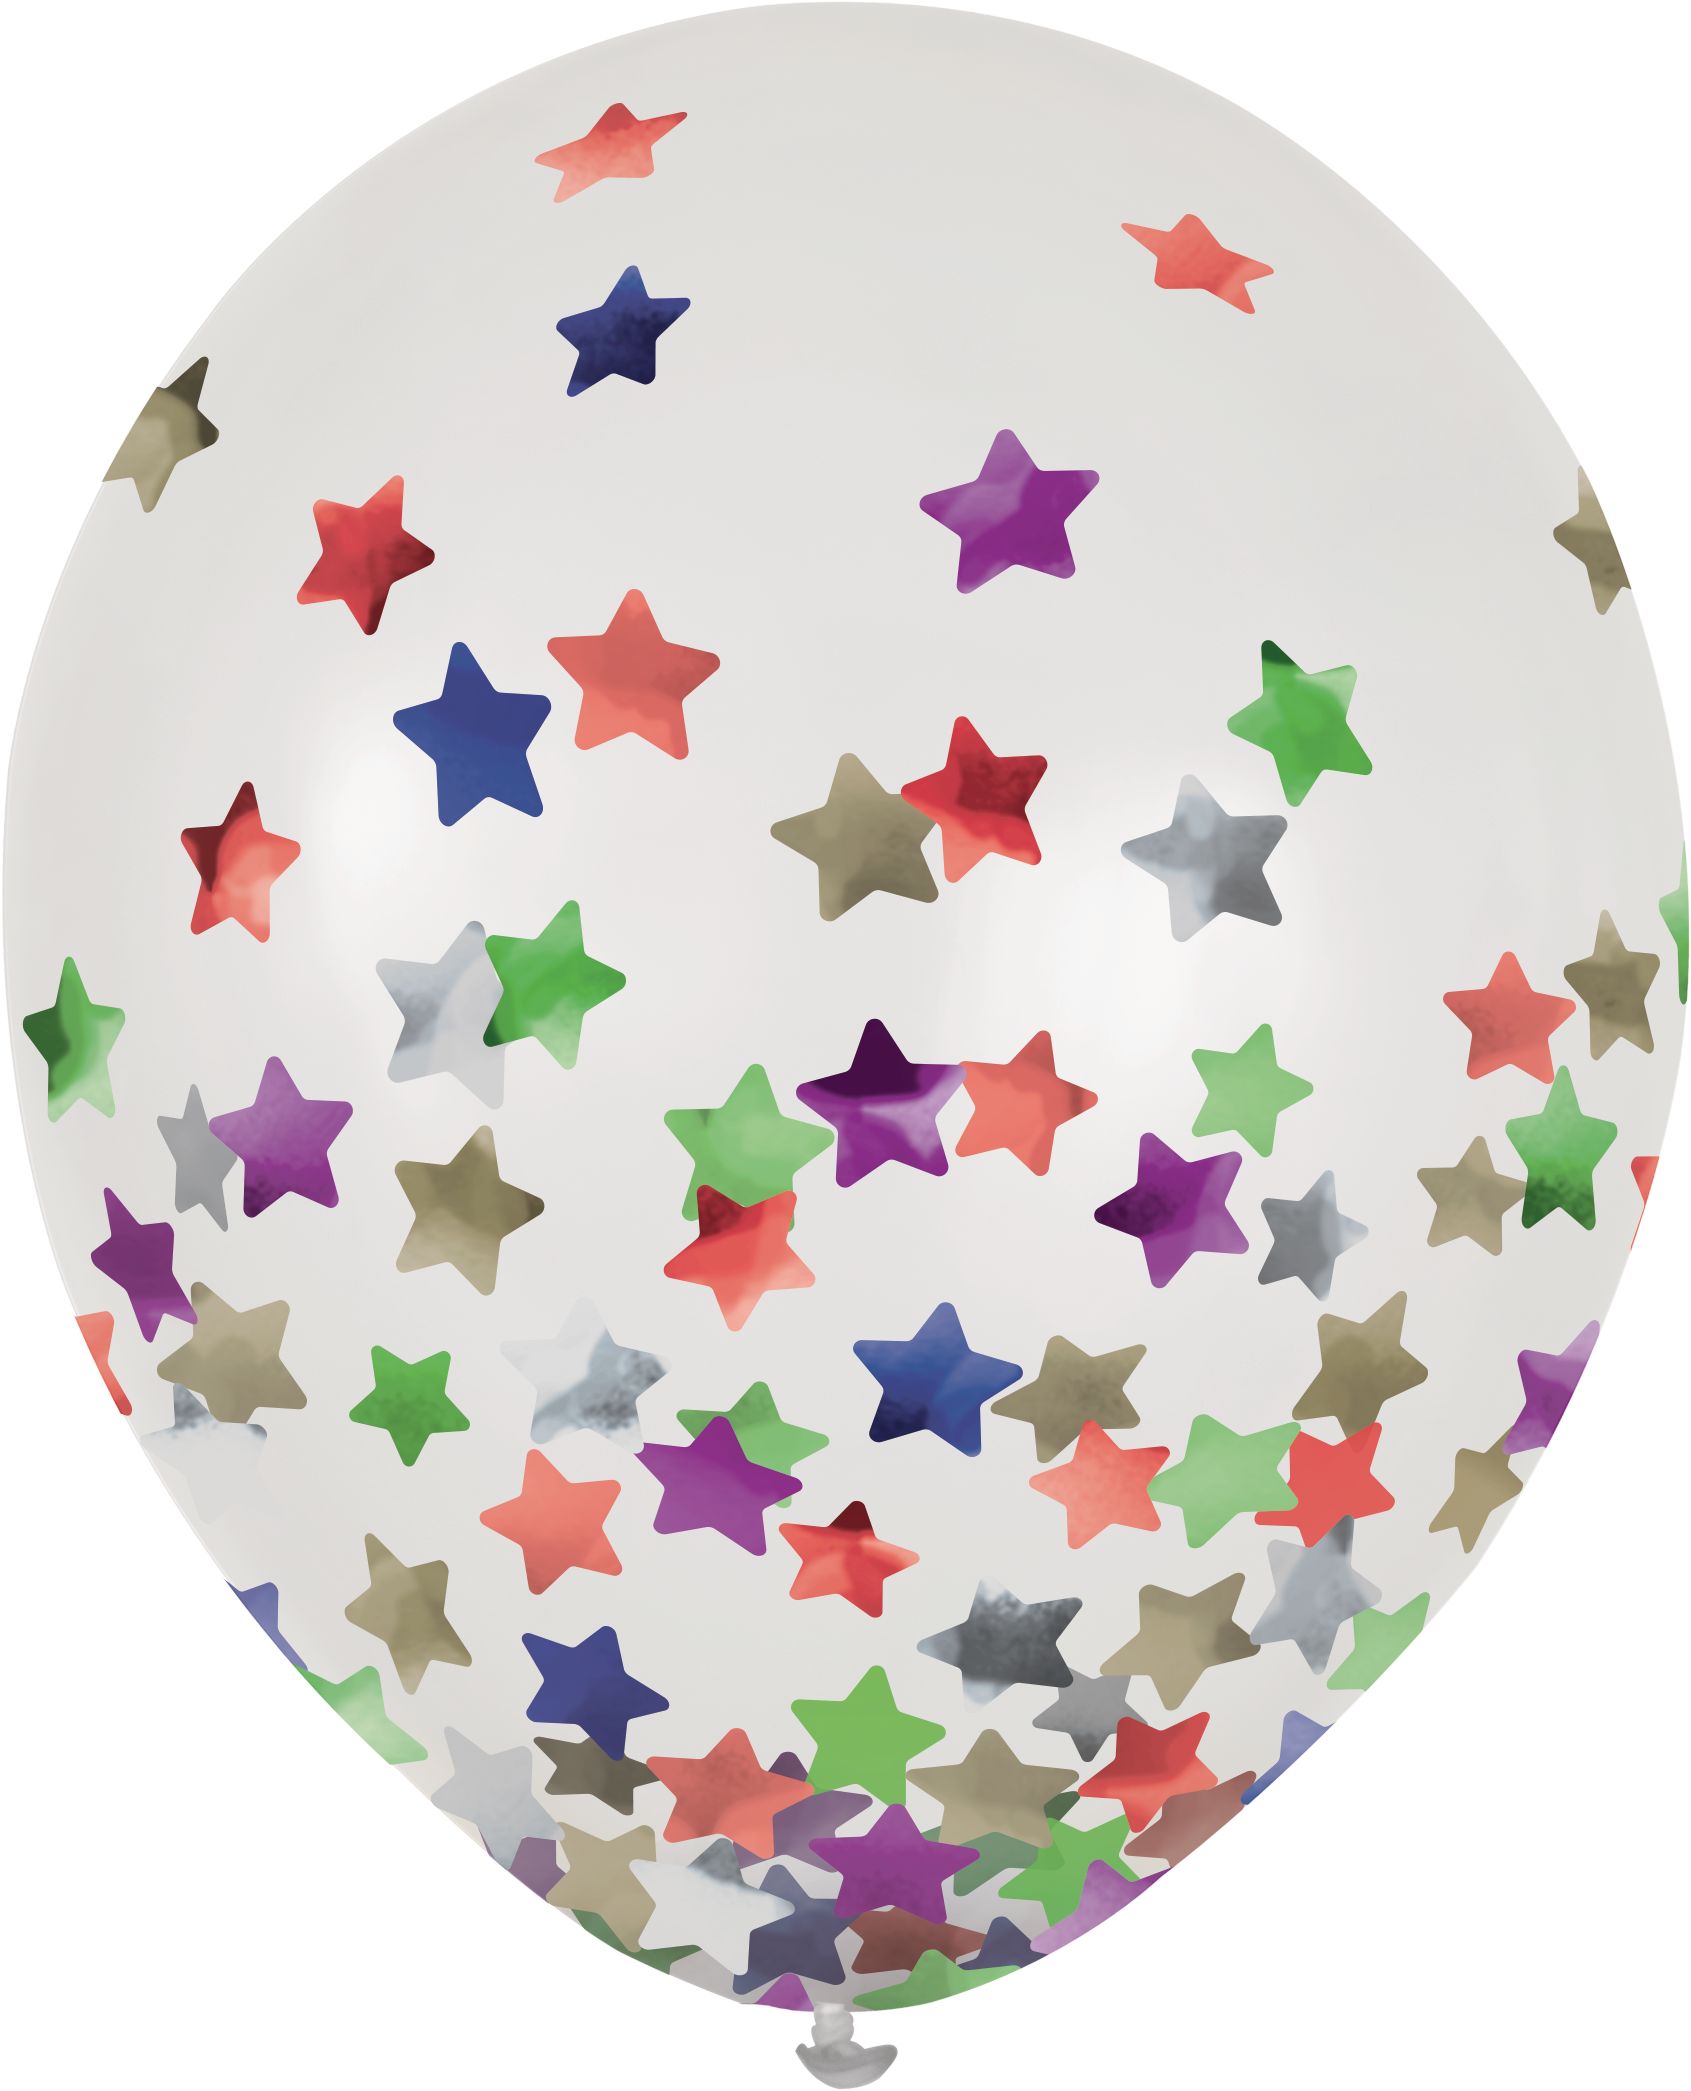 Bouquet de ballons confettis - bleu et argent – Balloon Expert